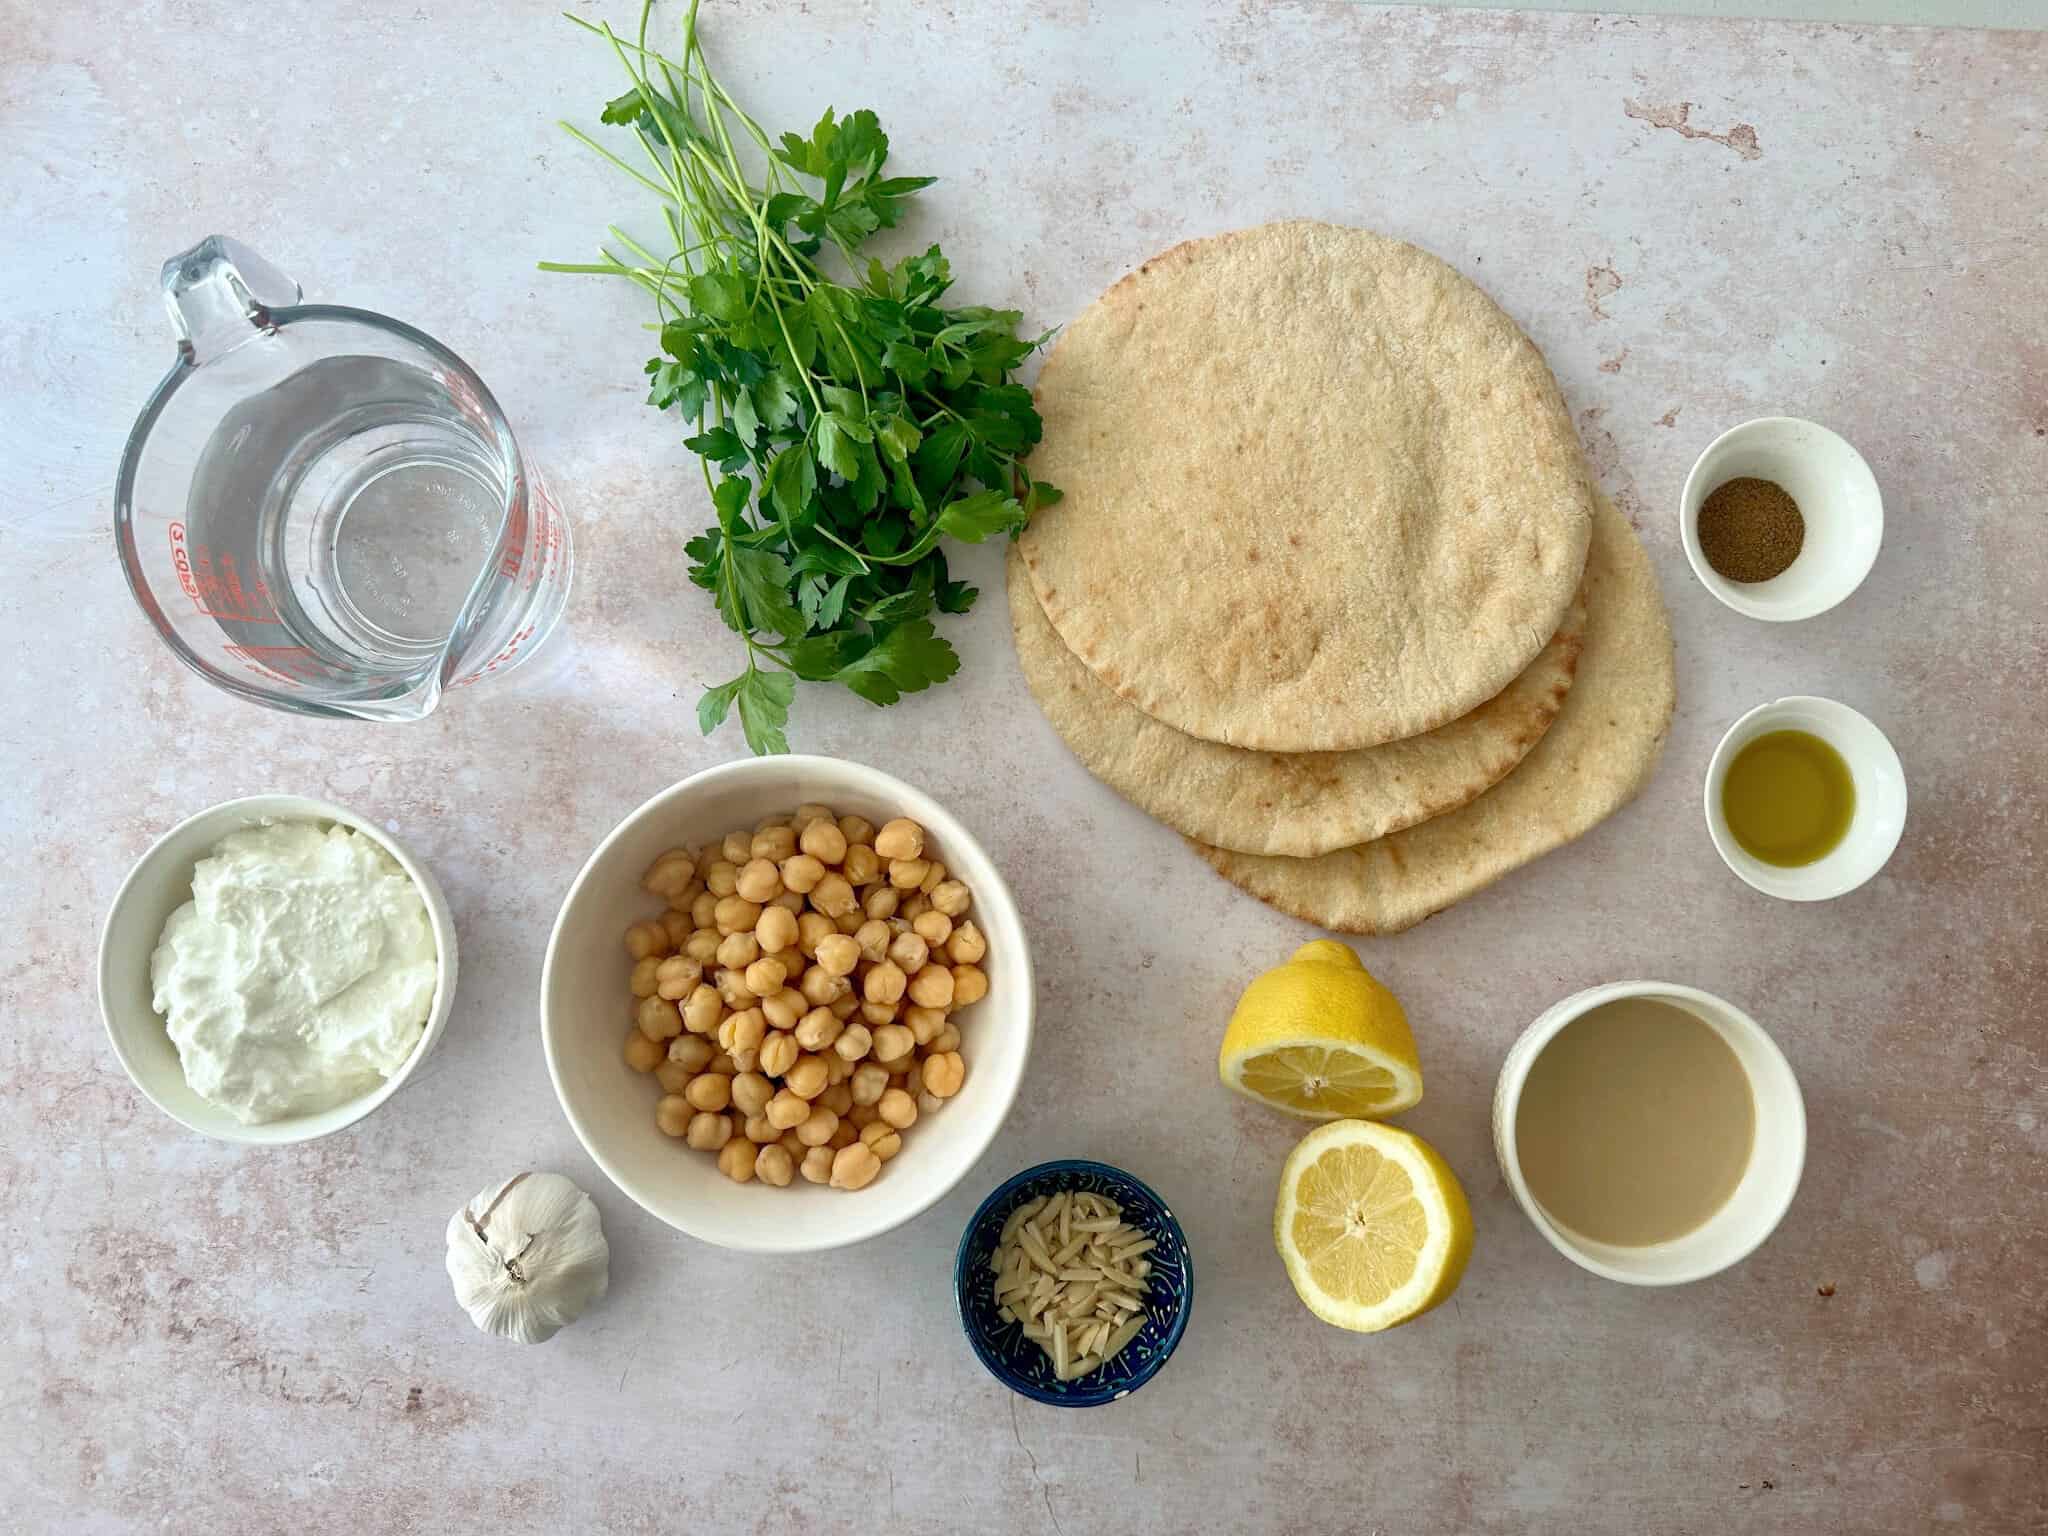 Fatteh recipe ingredients you will need: Pita, chickpeas, yogurt, garlic, fresh parsley, olive oil, tahini, lemon juice, cumin, black pepper, slithered almonds, and water